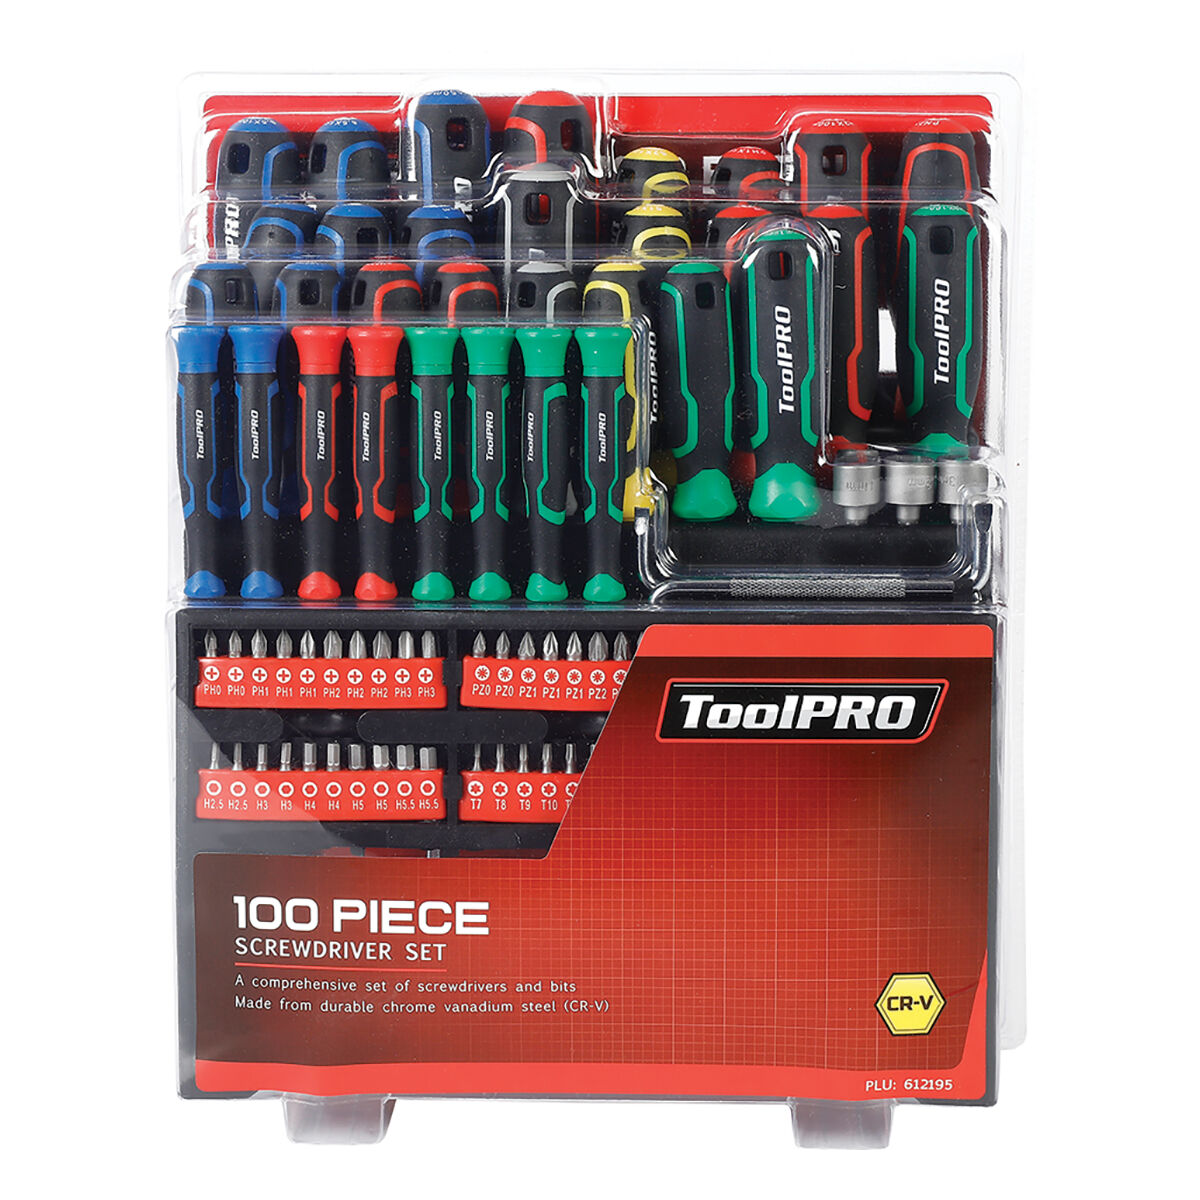 ToolPRO Screwdriver Set - 100 Piece | Supercheap Auto